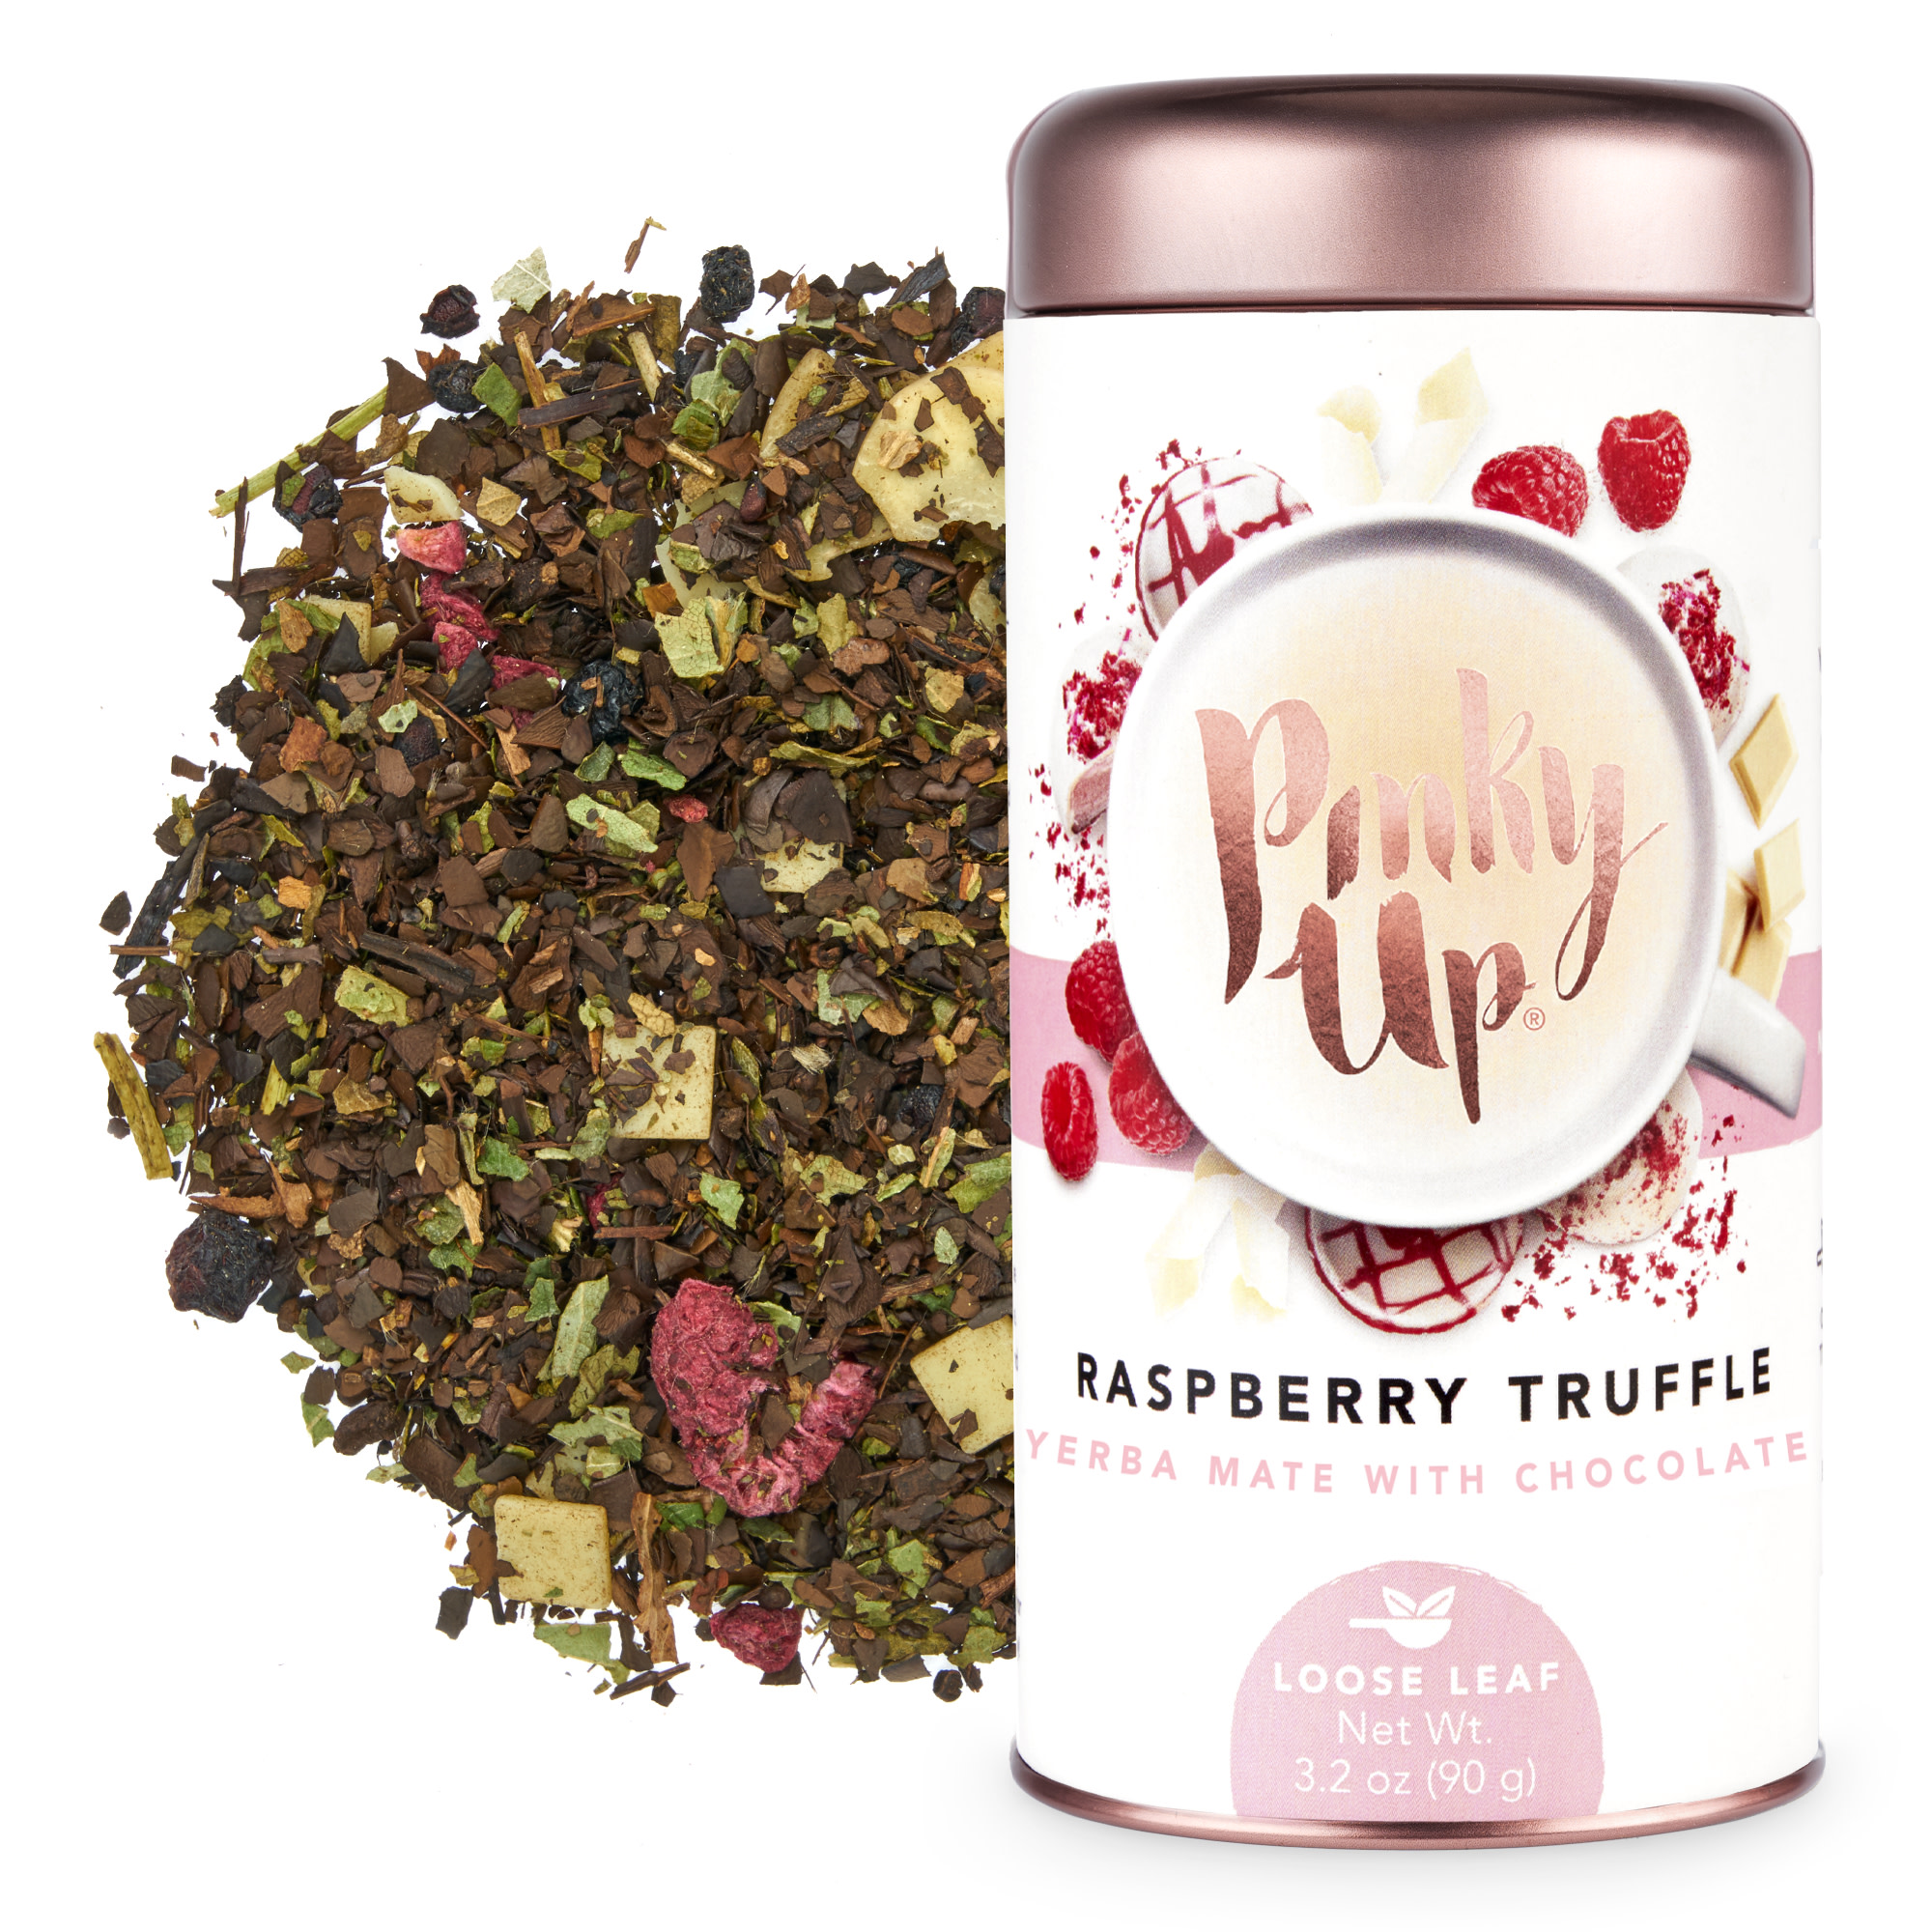 Pinky Up Raspberry Truffle Loose Leaf Tea